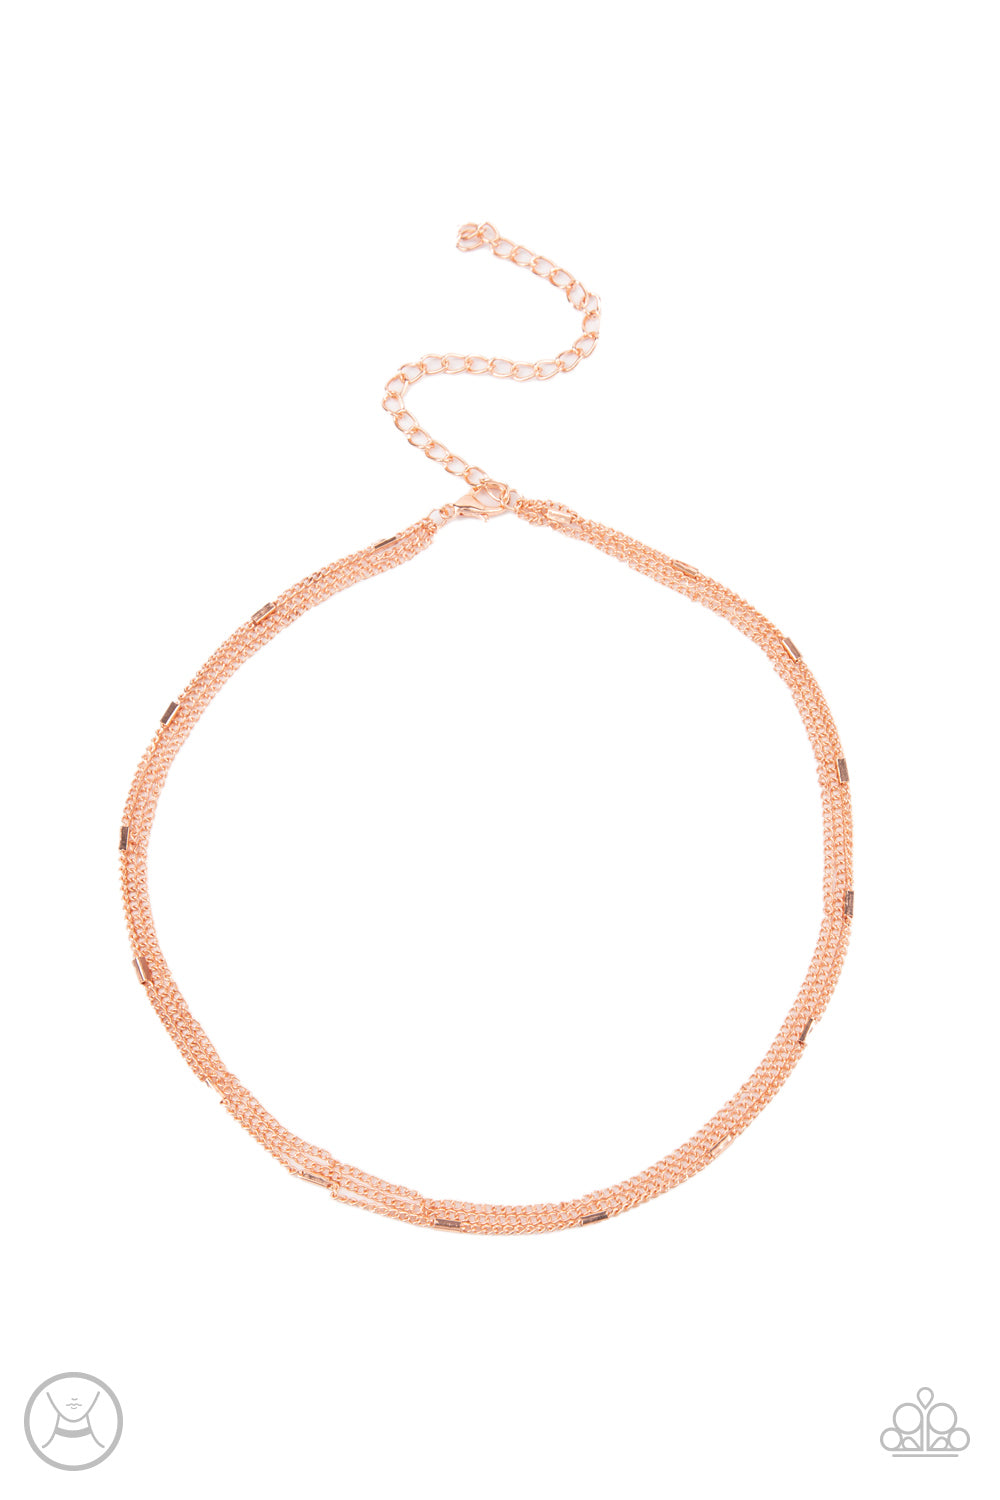 Need I SLAY More - Copper Choker Necklace Set - Princess Glam Shop